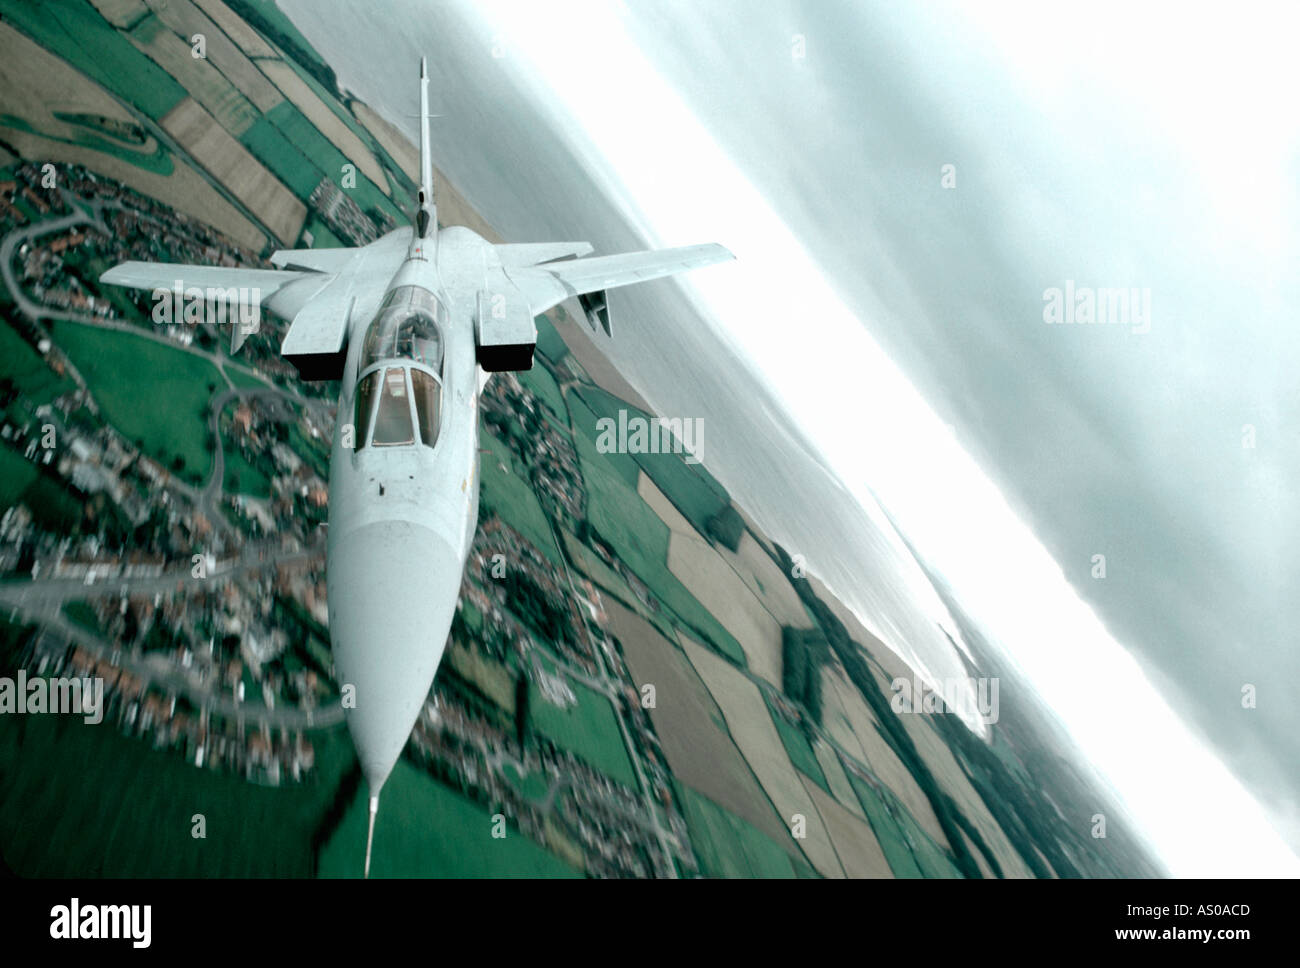 Tornado F3 jet aircraft Stock Photo